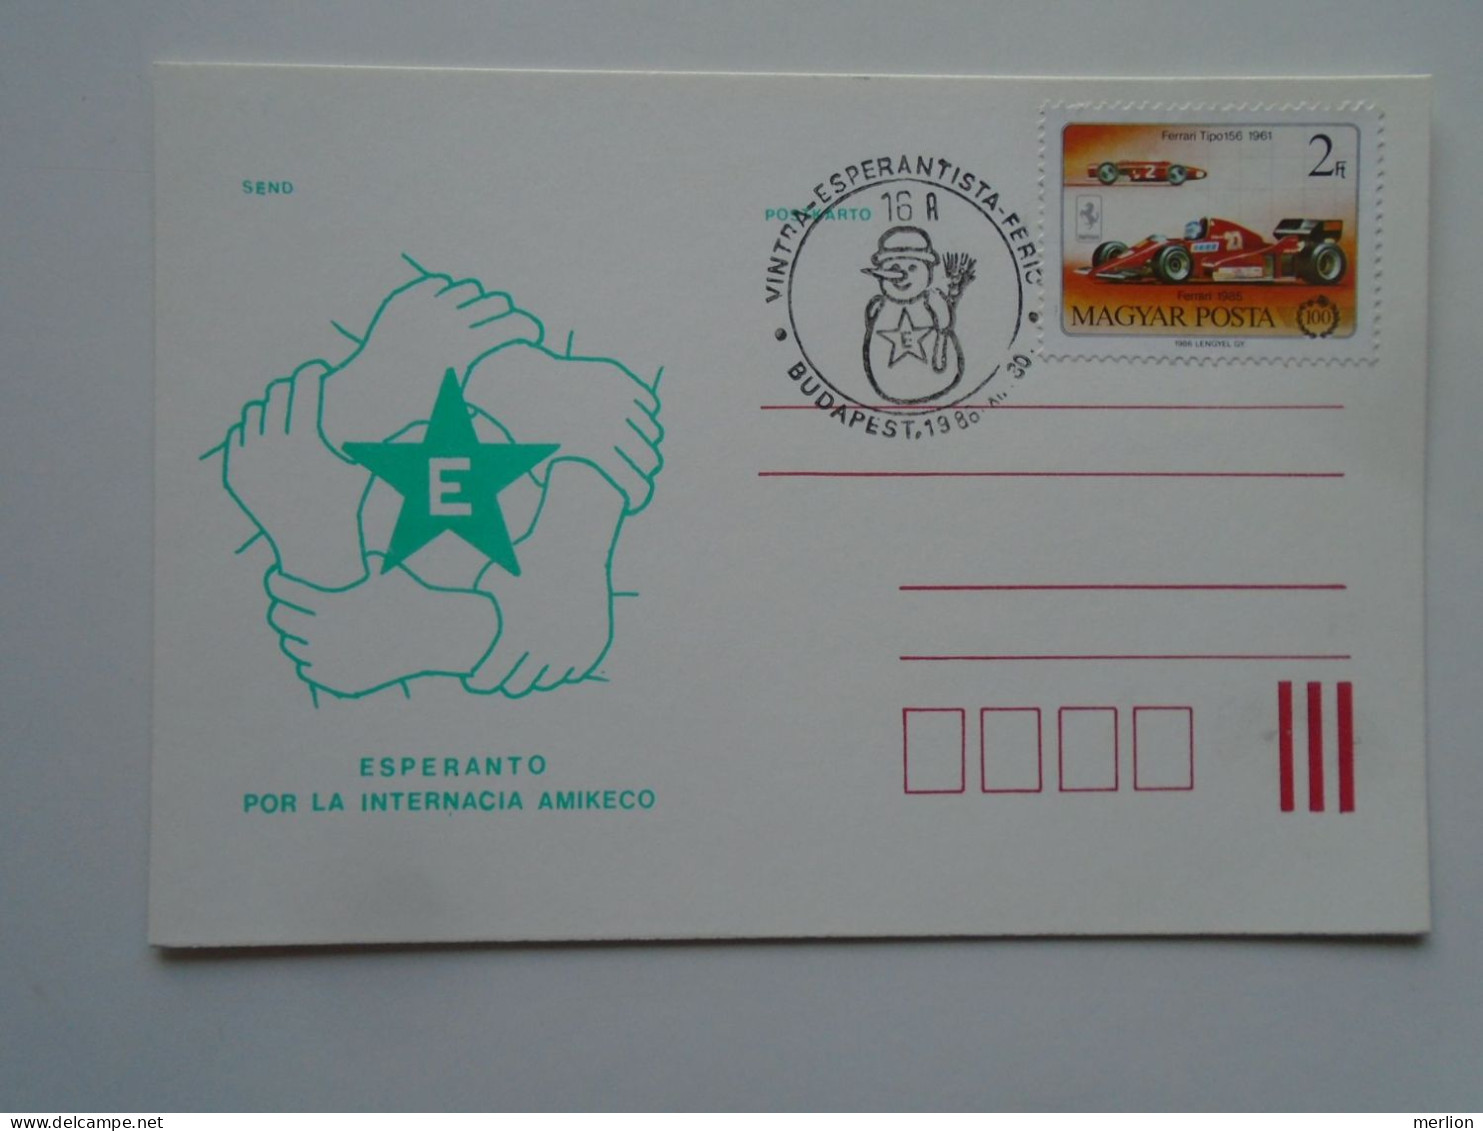 D200619   Hungary  -1986 Emléklap Levelezőlap - Postcard  Budapest  Esperanto - Esperanto